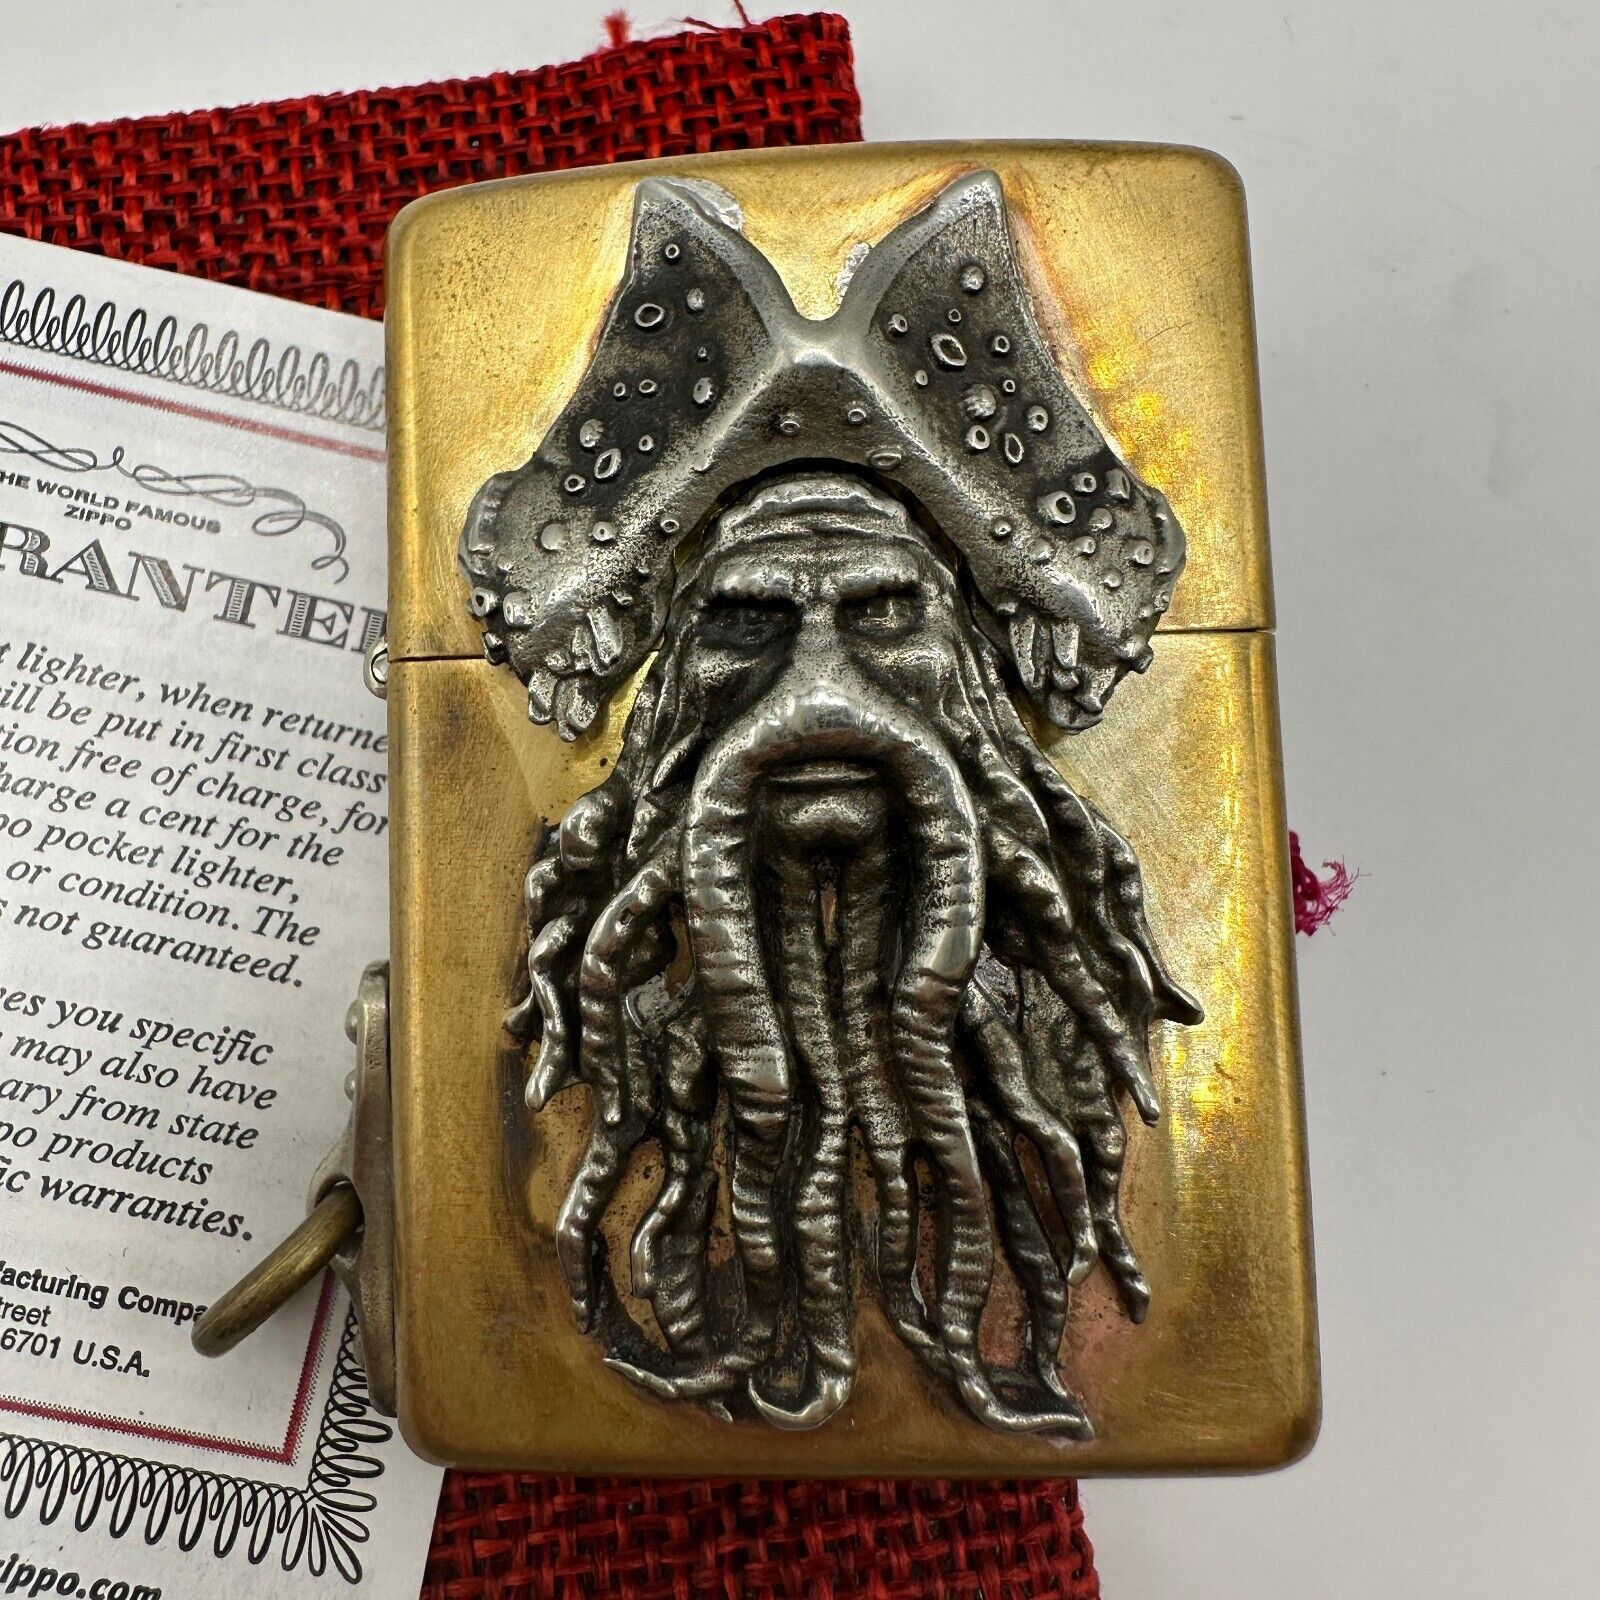 Mystical Cthulhu Mythos and Zippo Lighter - Antique Finish, Oceanic Deity Design